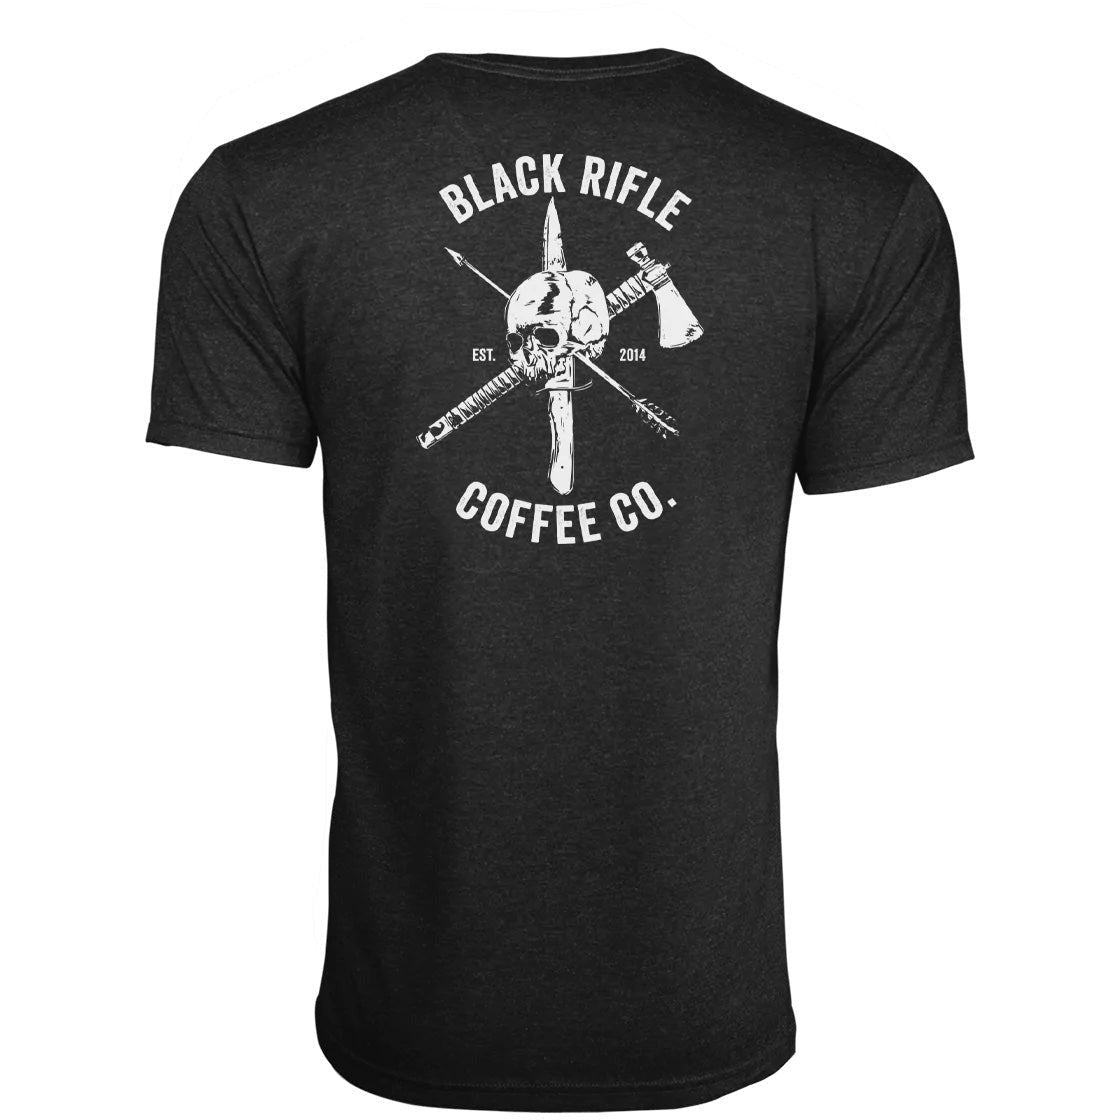 CAF Skull T-Shirt Shirts & Tops Black Rifle Coffee Company Small  